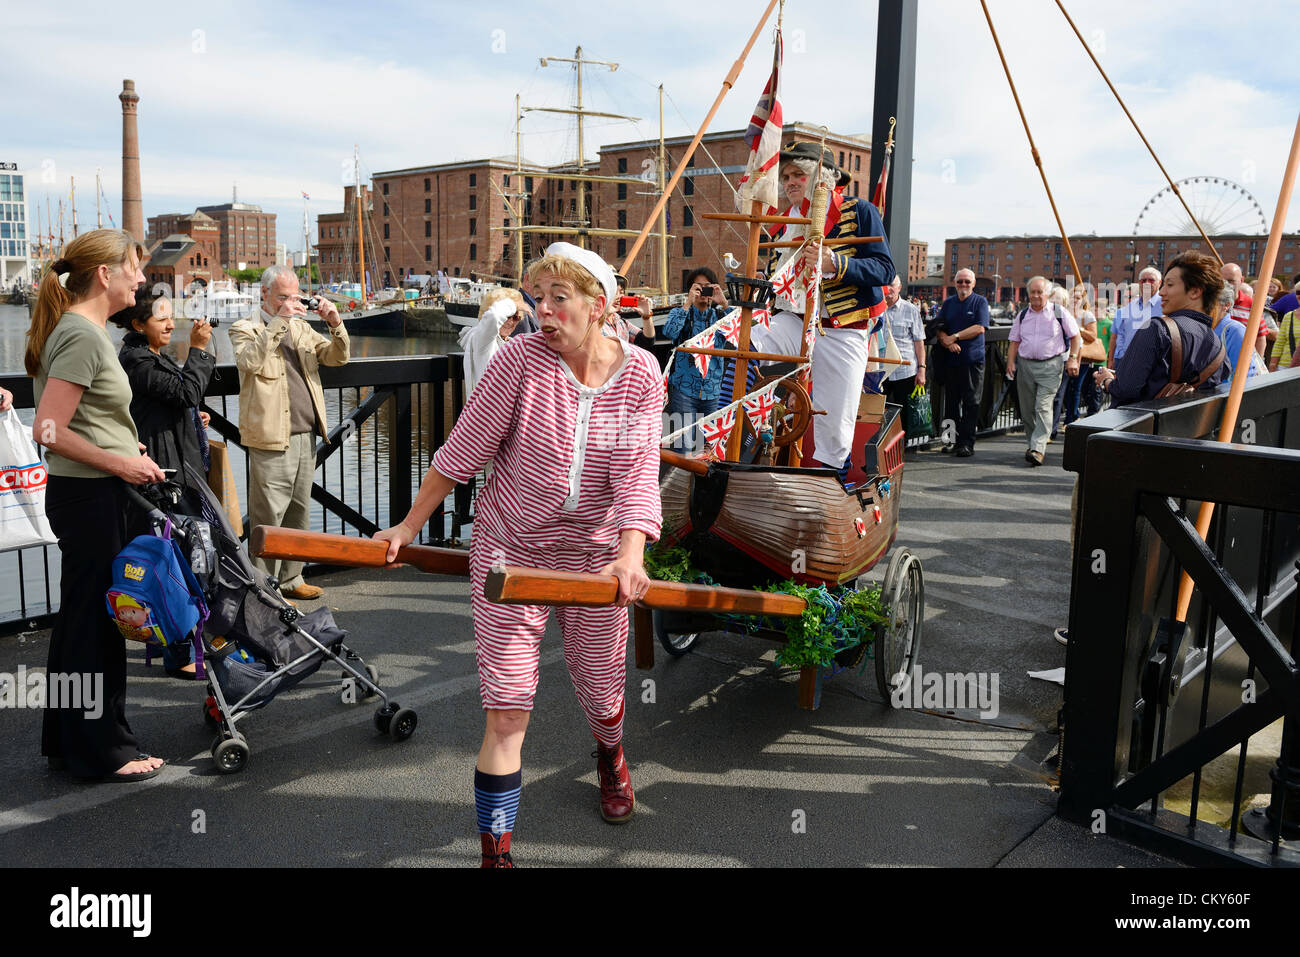 Saturday 1st September 2012. Liverpool, UK. The Irish Sea 2012 Tall Ships Regatta. Street entertainment at The Albert Dock, Liverpool. Stock Photo